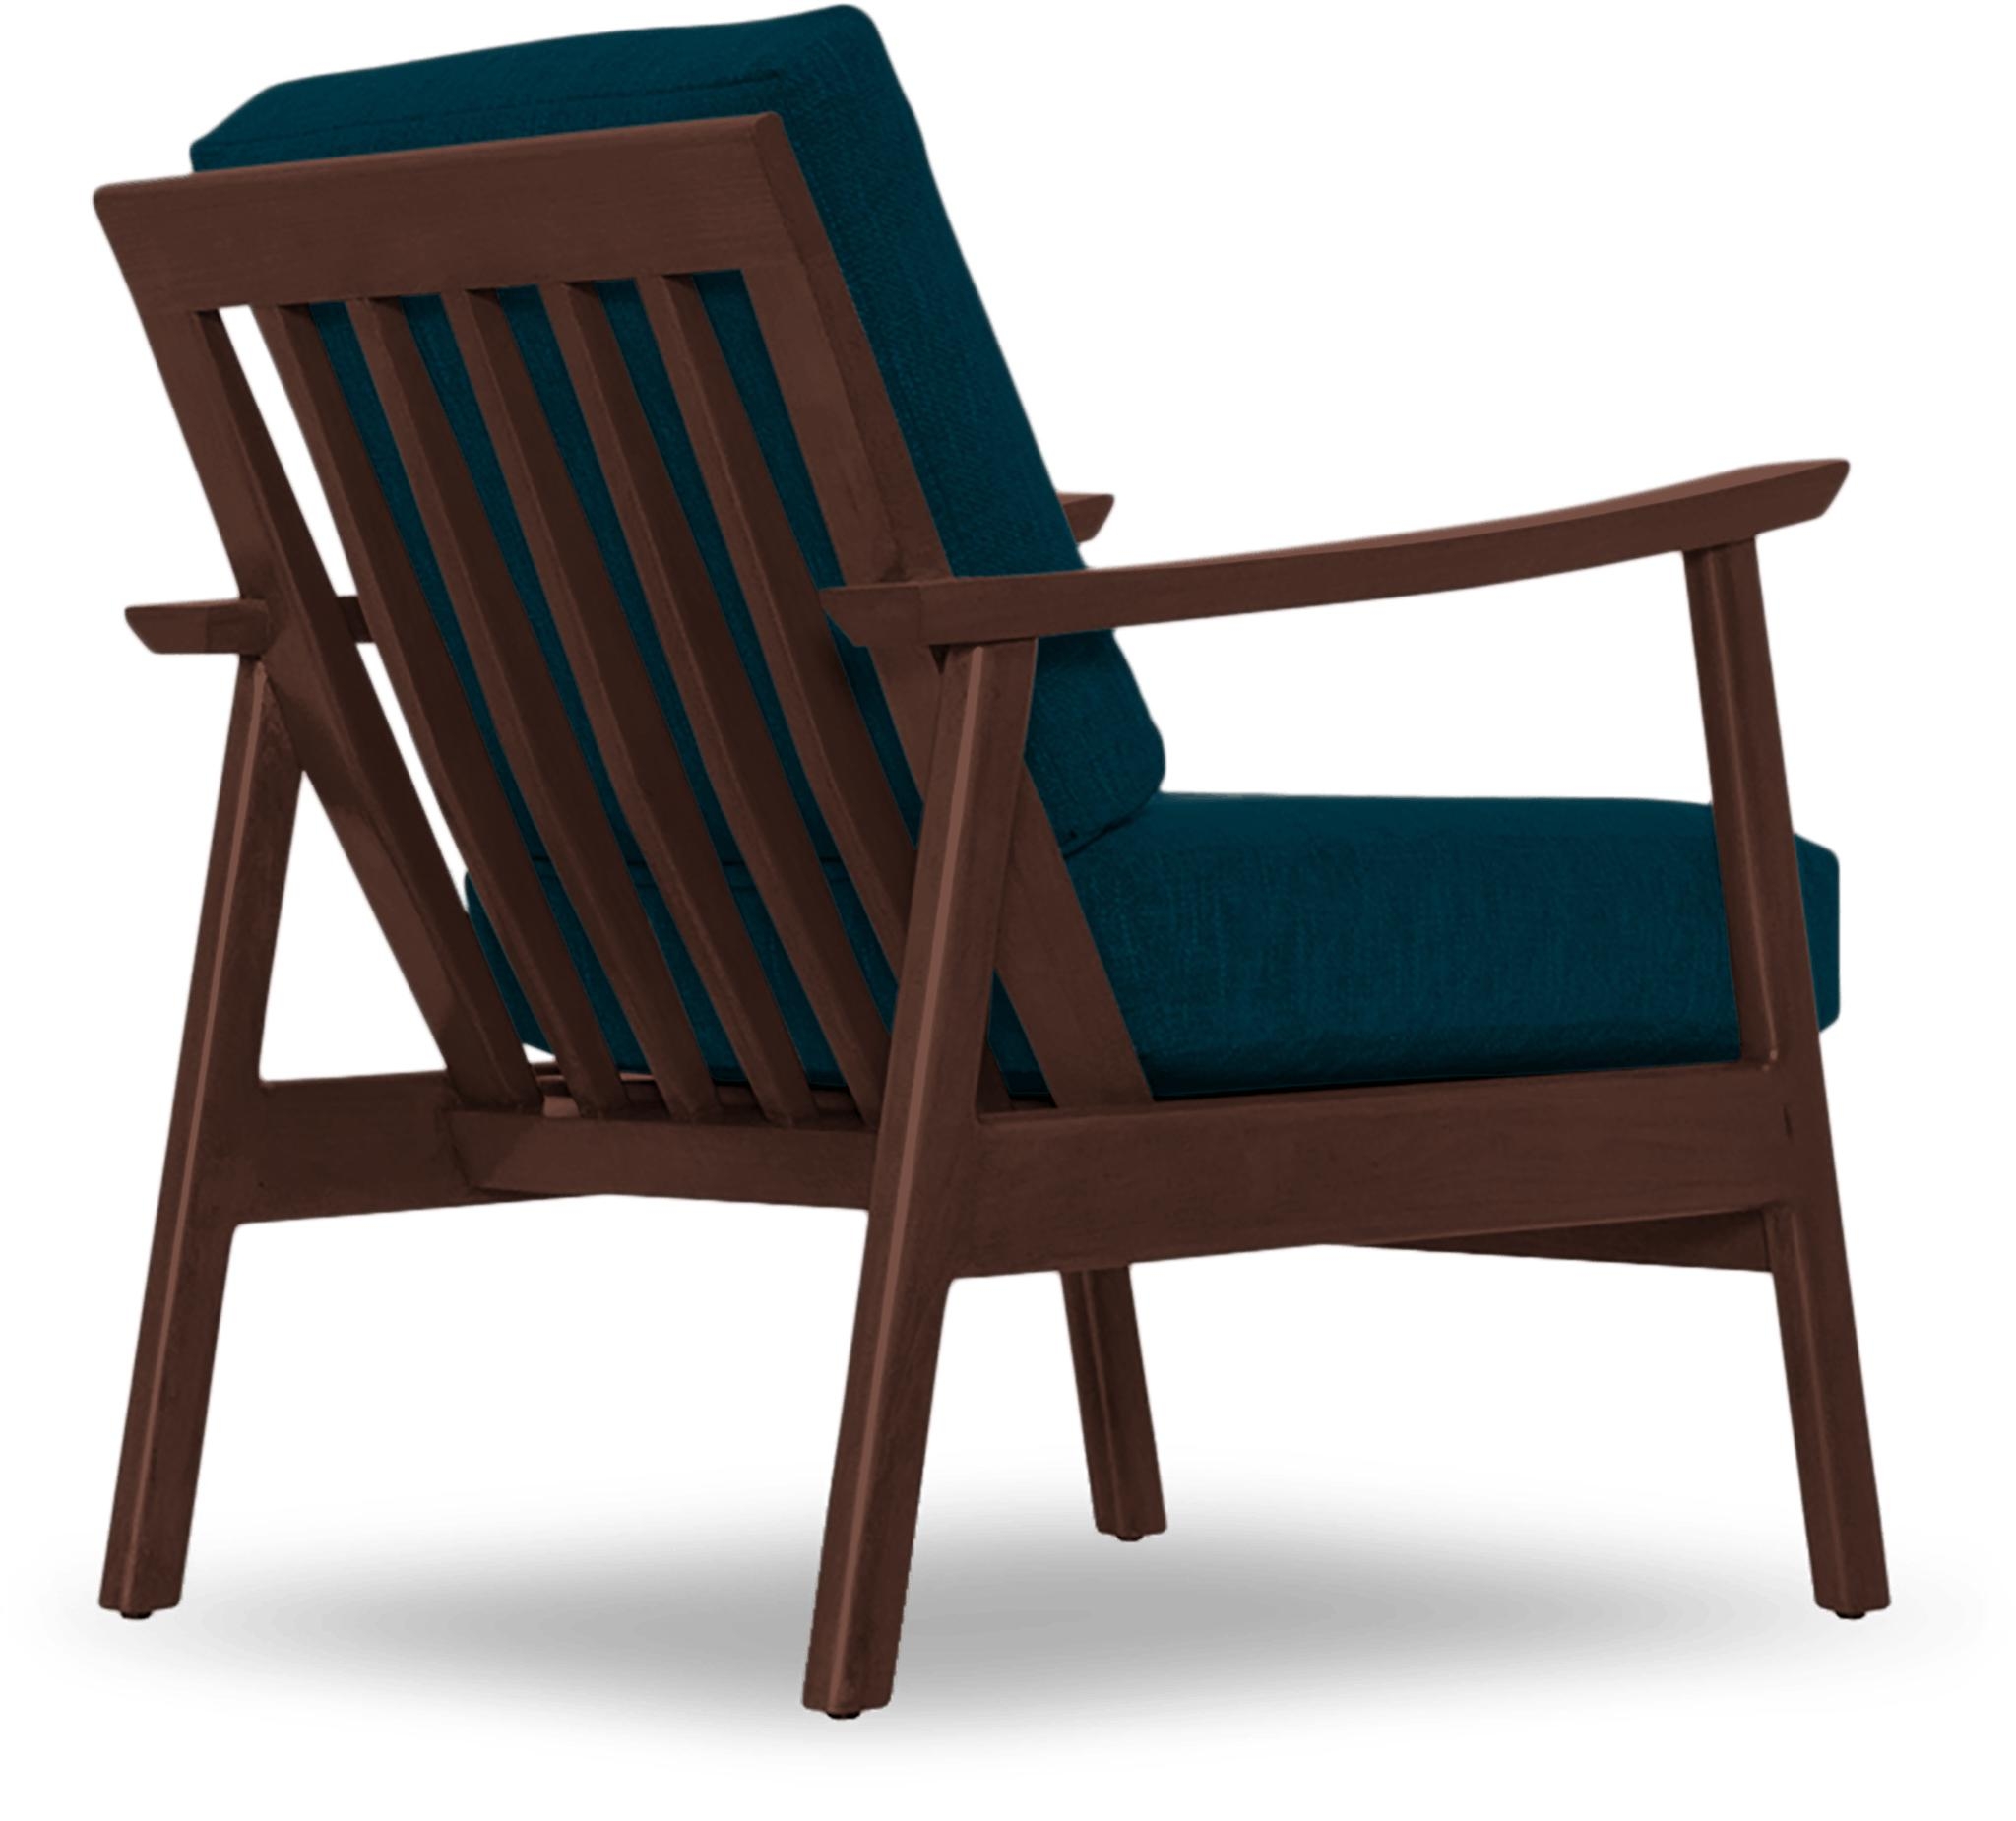 Blue Paley Mid Century Modern Chair - Key Largo Zenith Teal - Walnut - Image 3